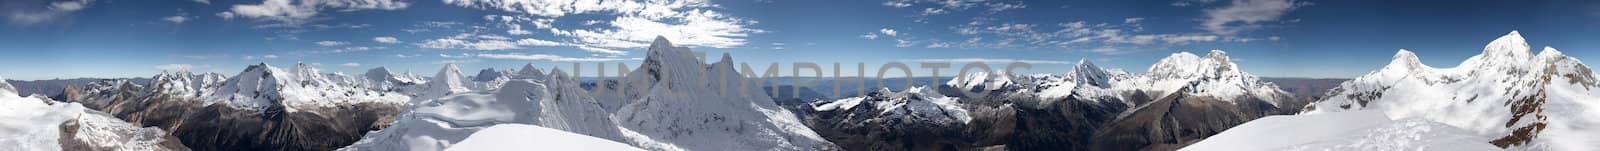 Circular 360 degrees panorama from Mount Pisco, Cordillera Blanca, Peru